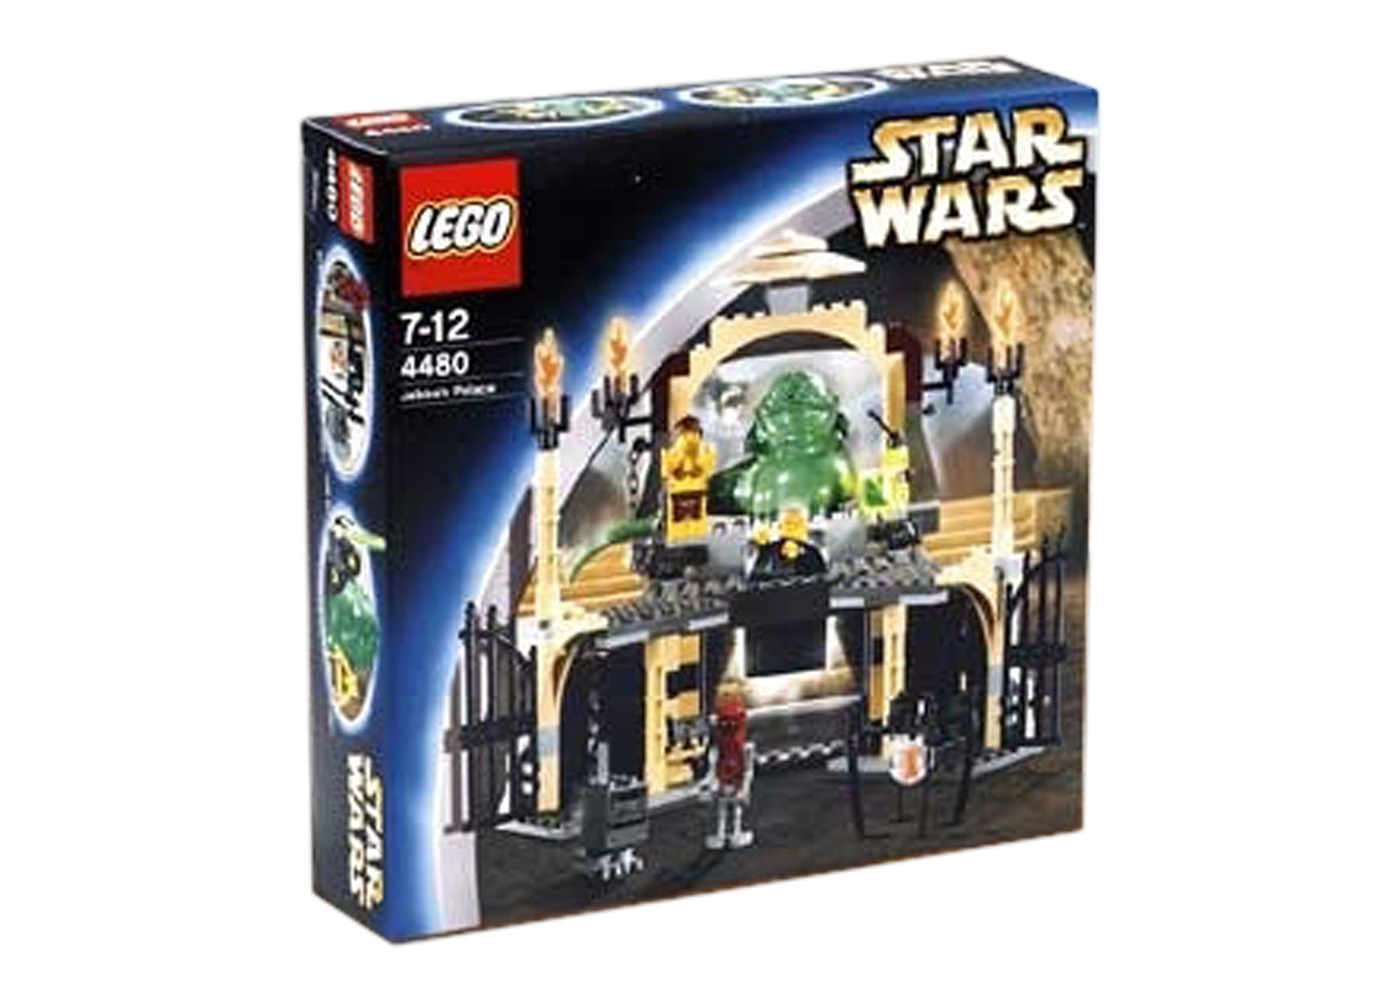 LEGO Star Wars Jabba's Palace Set 4480 - US